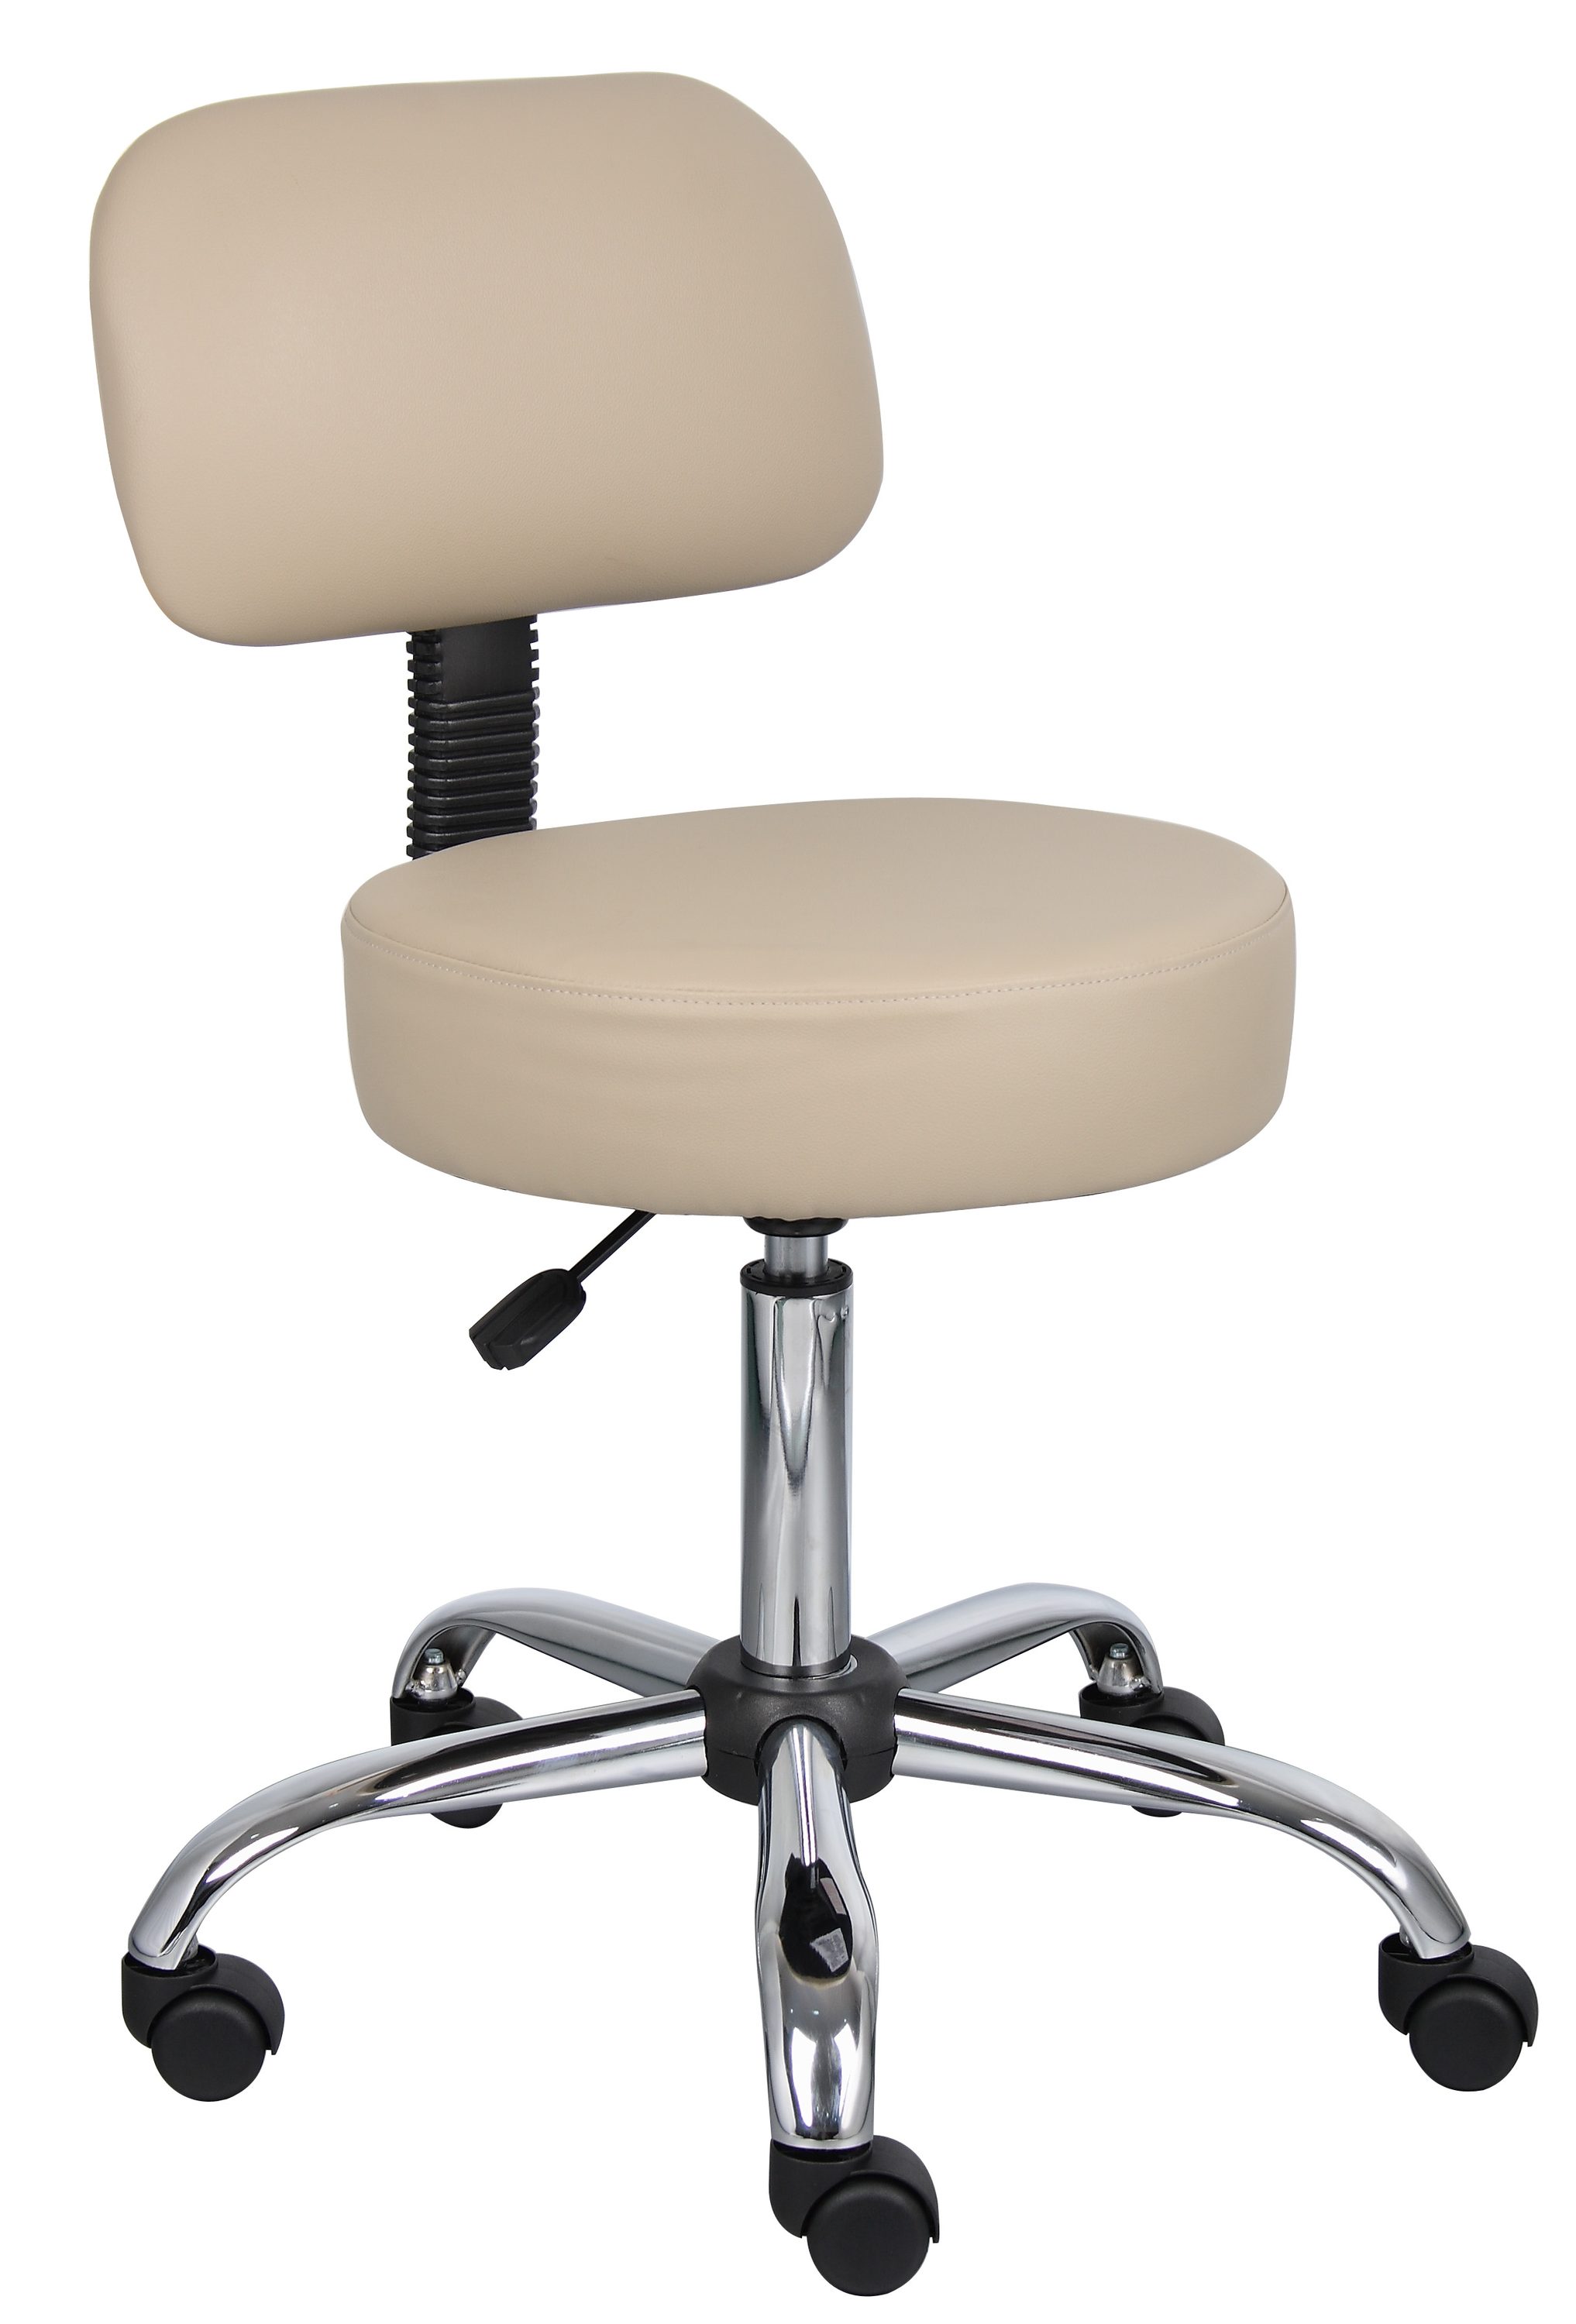 Black Caressoft Faux Leather Medical Drafting Stool Adjustable Office Desk Chair 